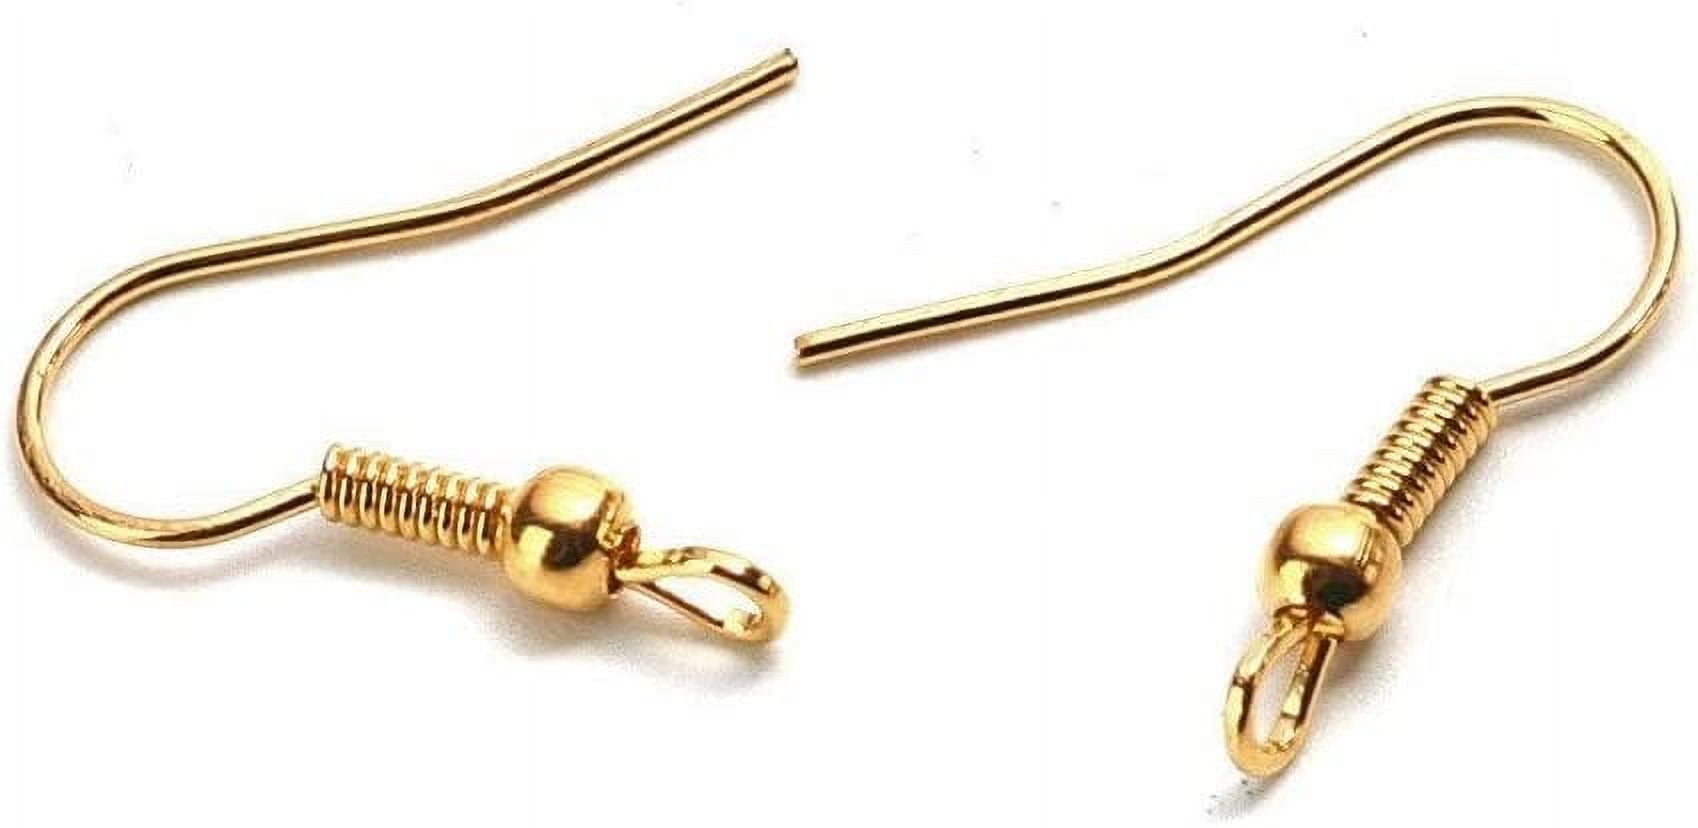 100pcs 20*17mm Gold Antique bronze Ear Hooks Earrings Clasps Findings  Earring Wires For Jewelry Making Supplies Wholesale - AliExpress